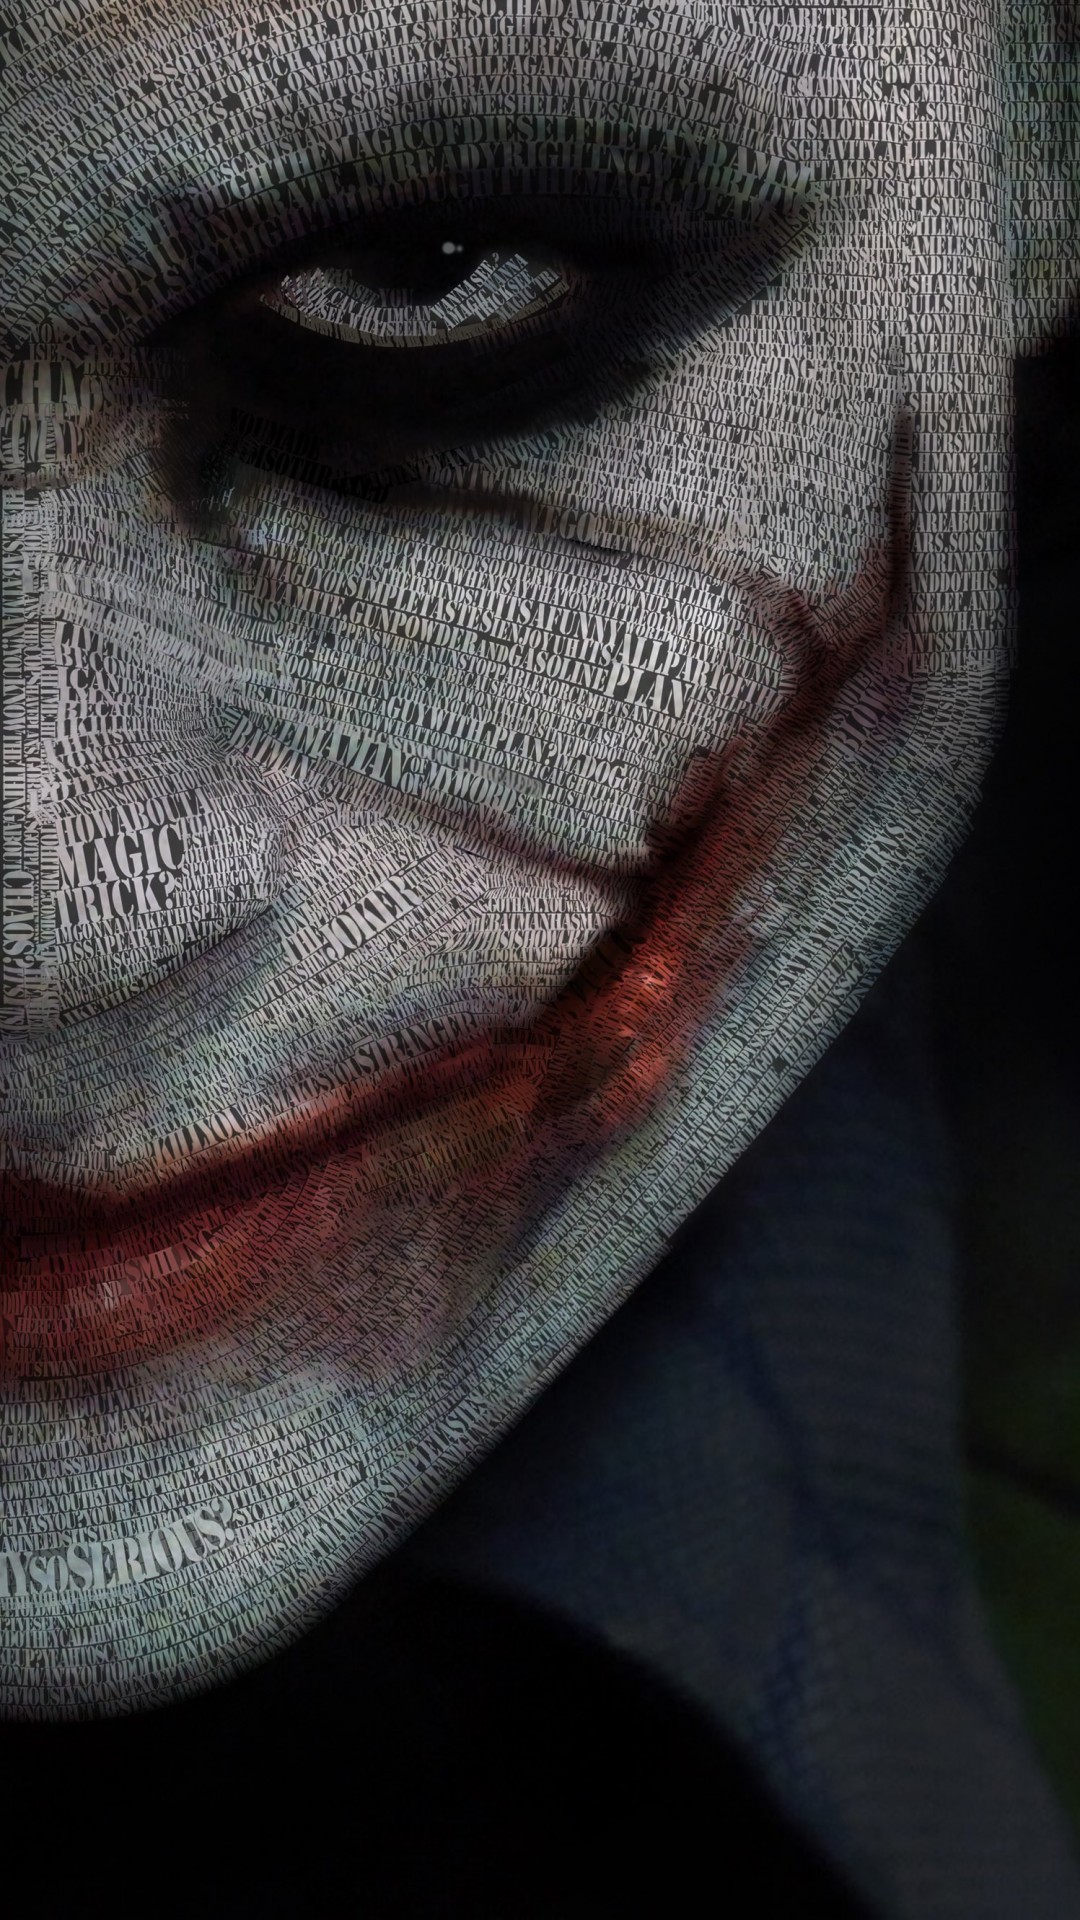 The Joker Typeface Portrait Wallpaper for Google Nexus 5